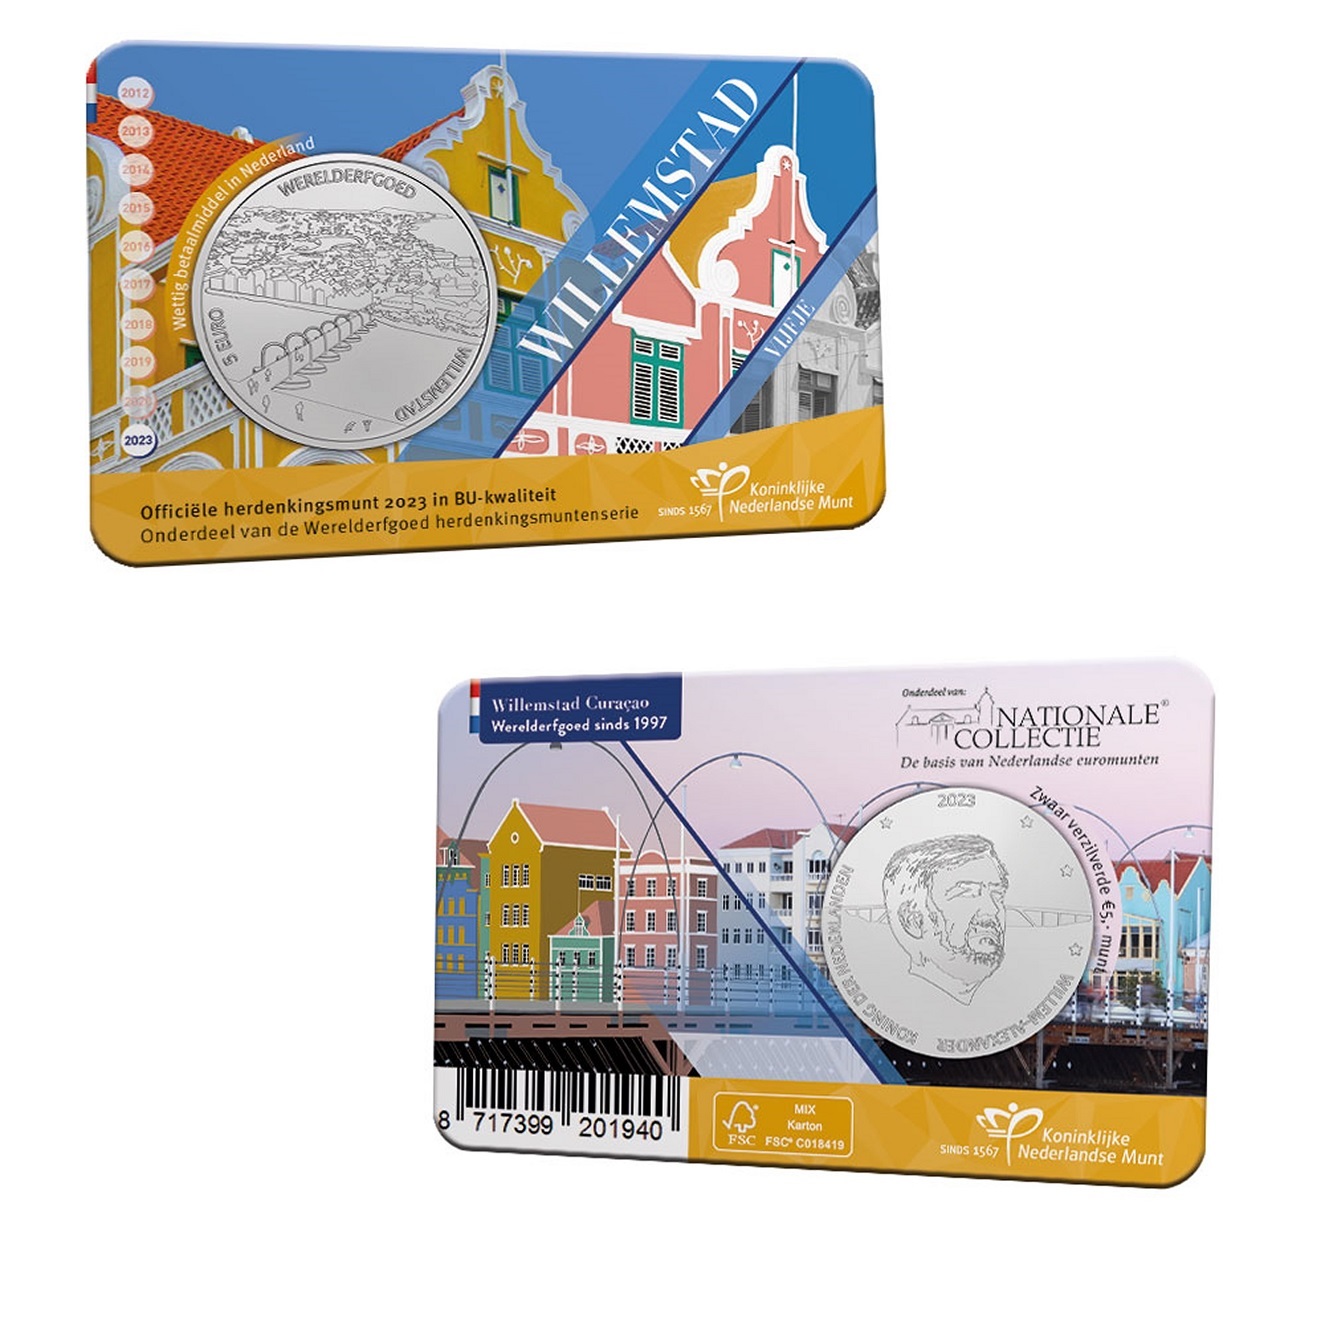 (EUR14.BU.2023.0115394) 5 € Netherlands 2023 BU - Willemstad (card) (zoom)